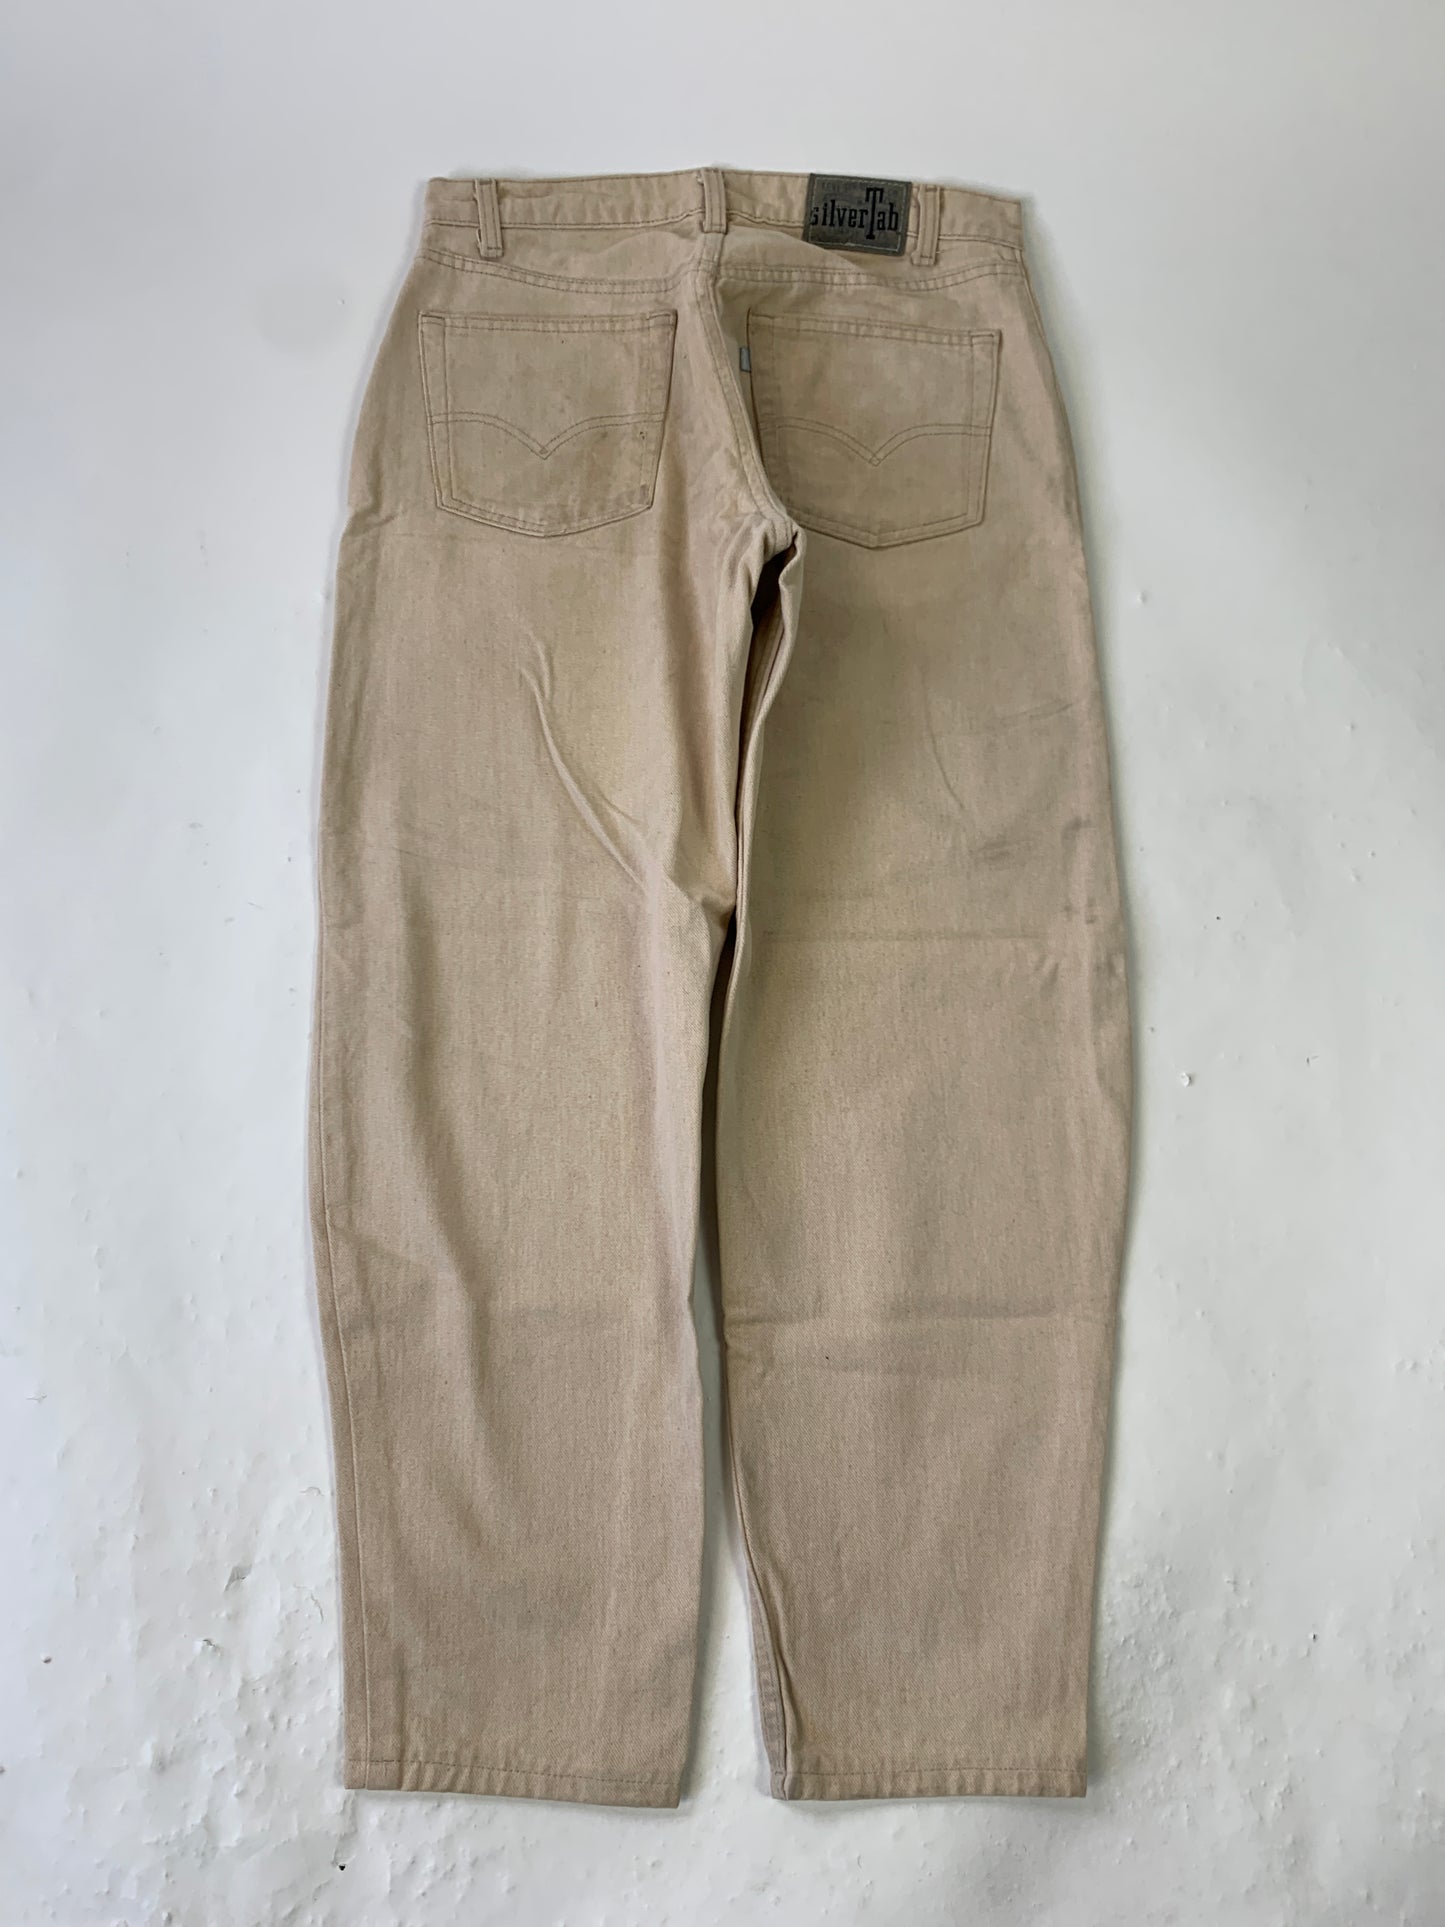 Levis Silvertab Vintage Jeans - 32